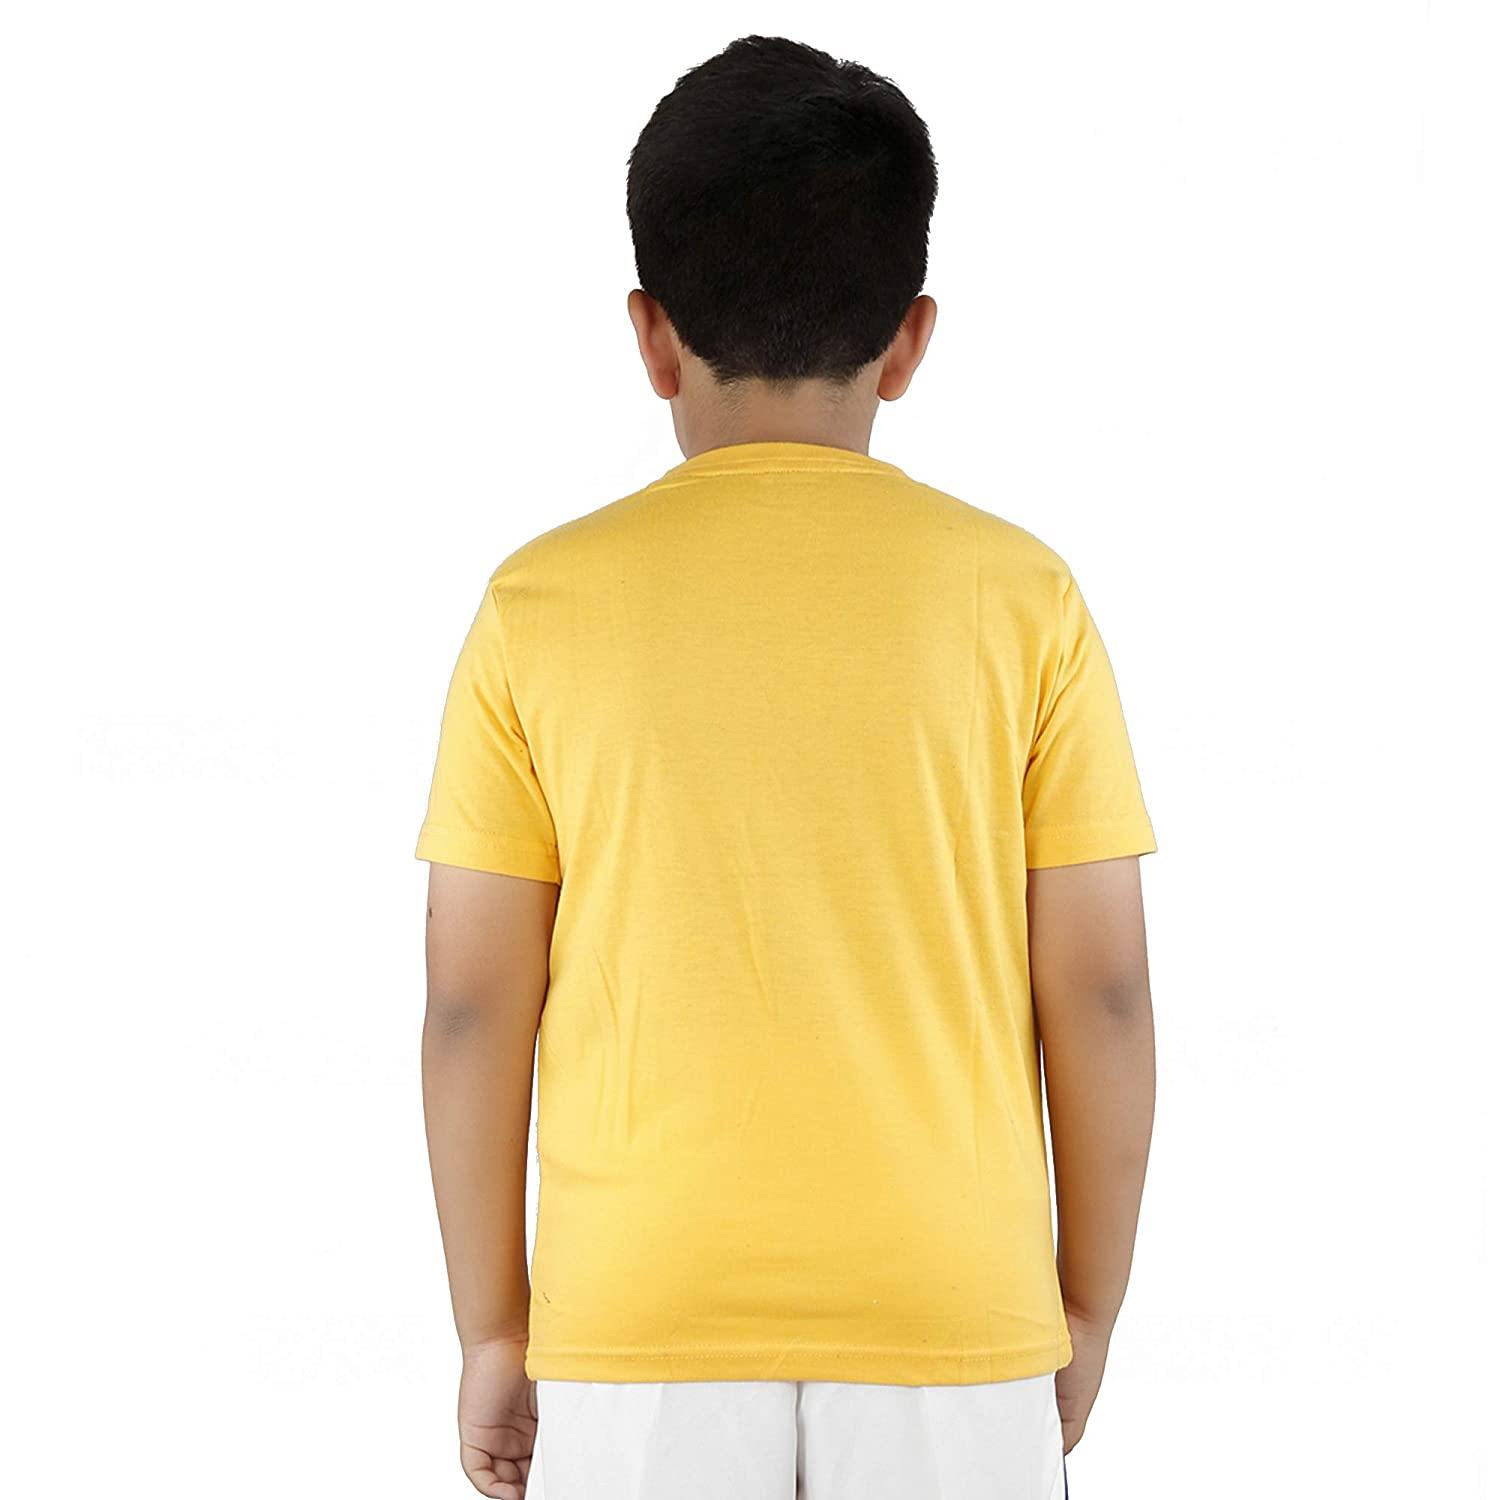 Vector X Cotton Kids T-shirt Yellow - Best Price online Prokicksports.com